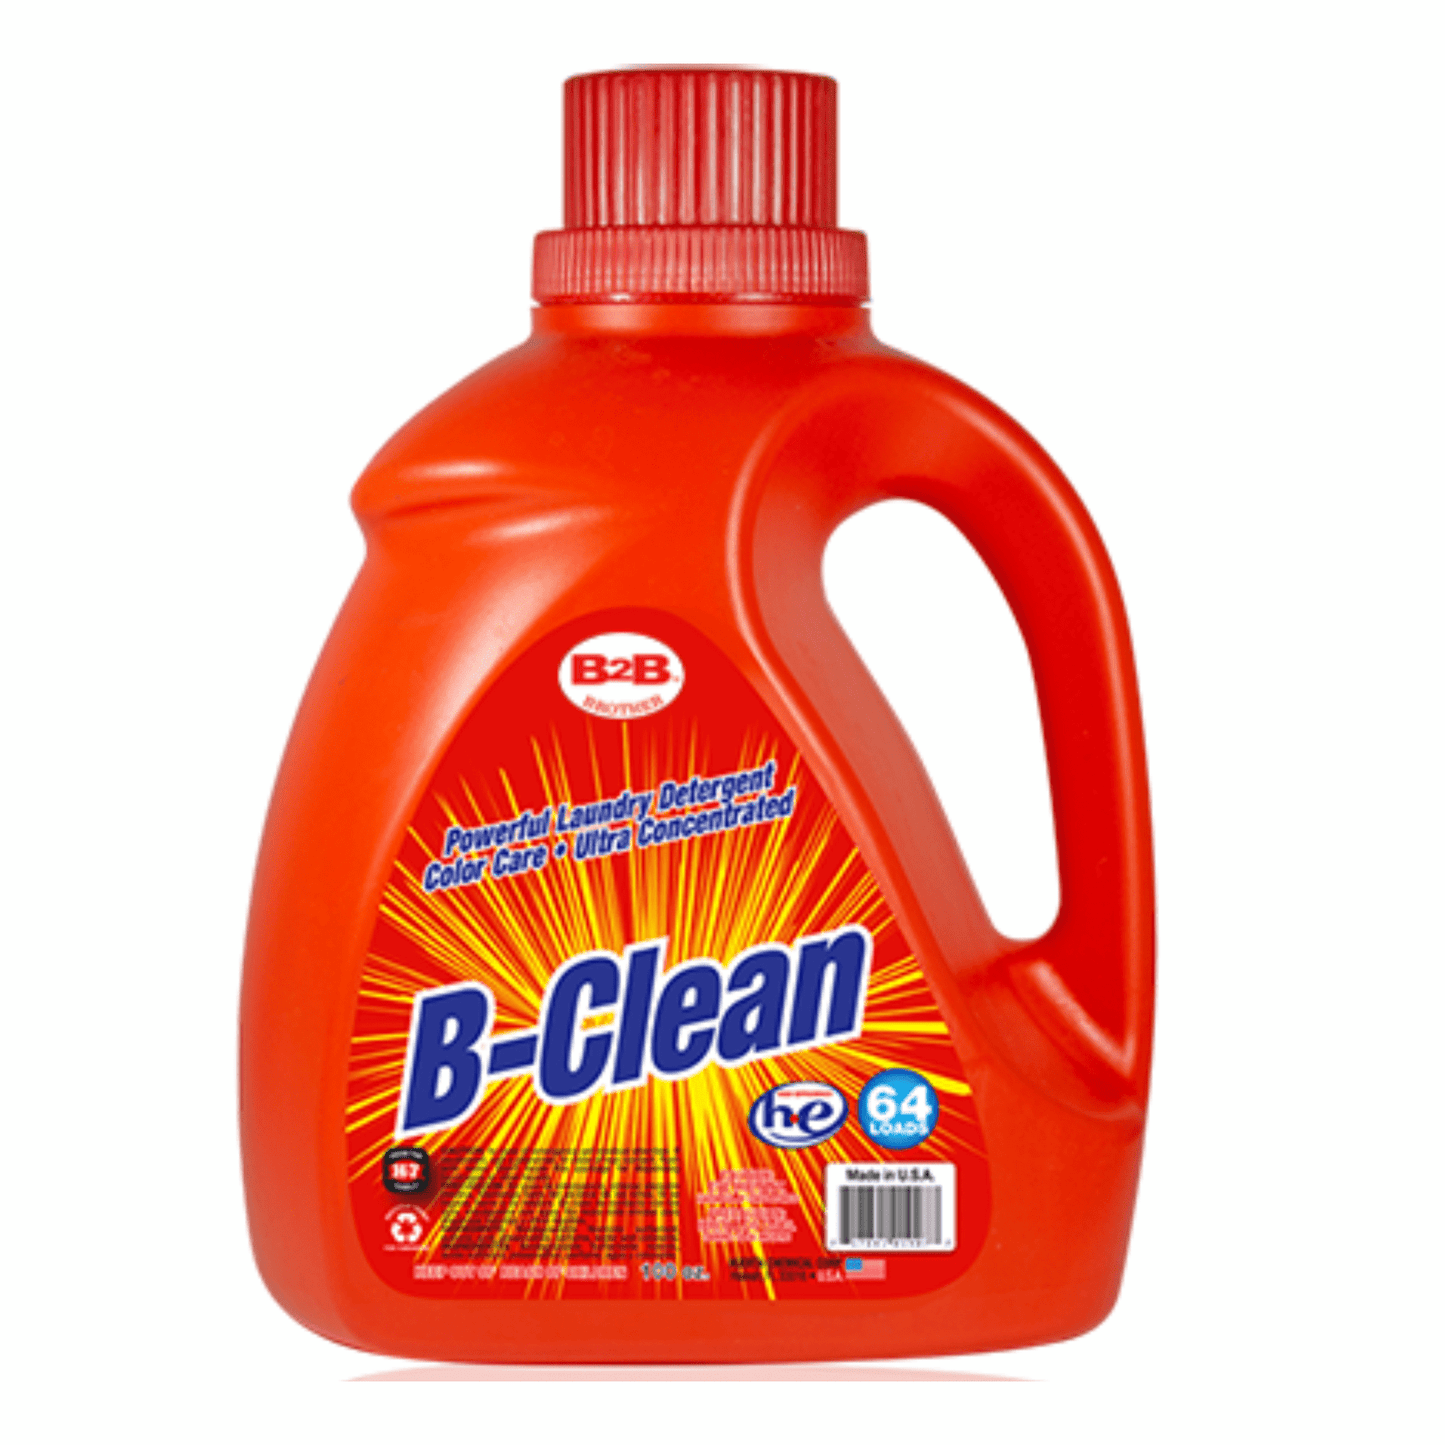 Laundry Detergent 100 oz  B-Clean Powerful By B2B "64 Loads"